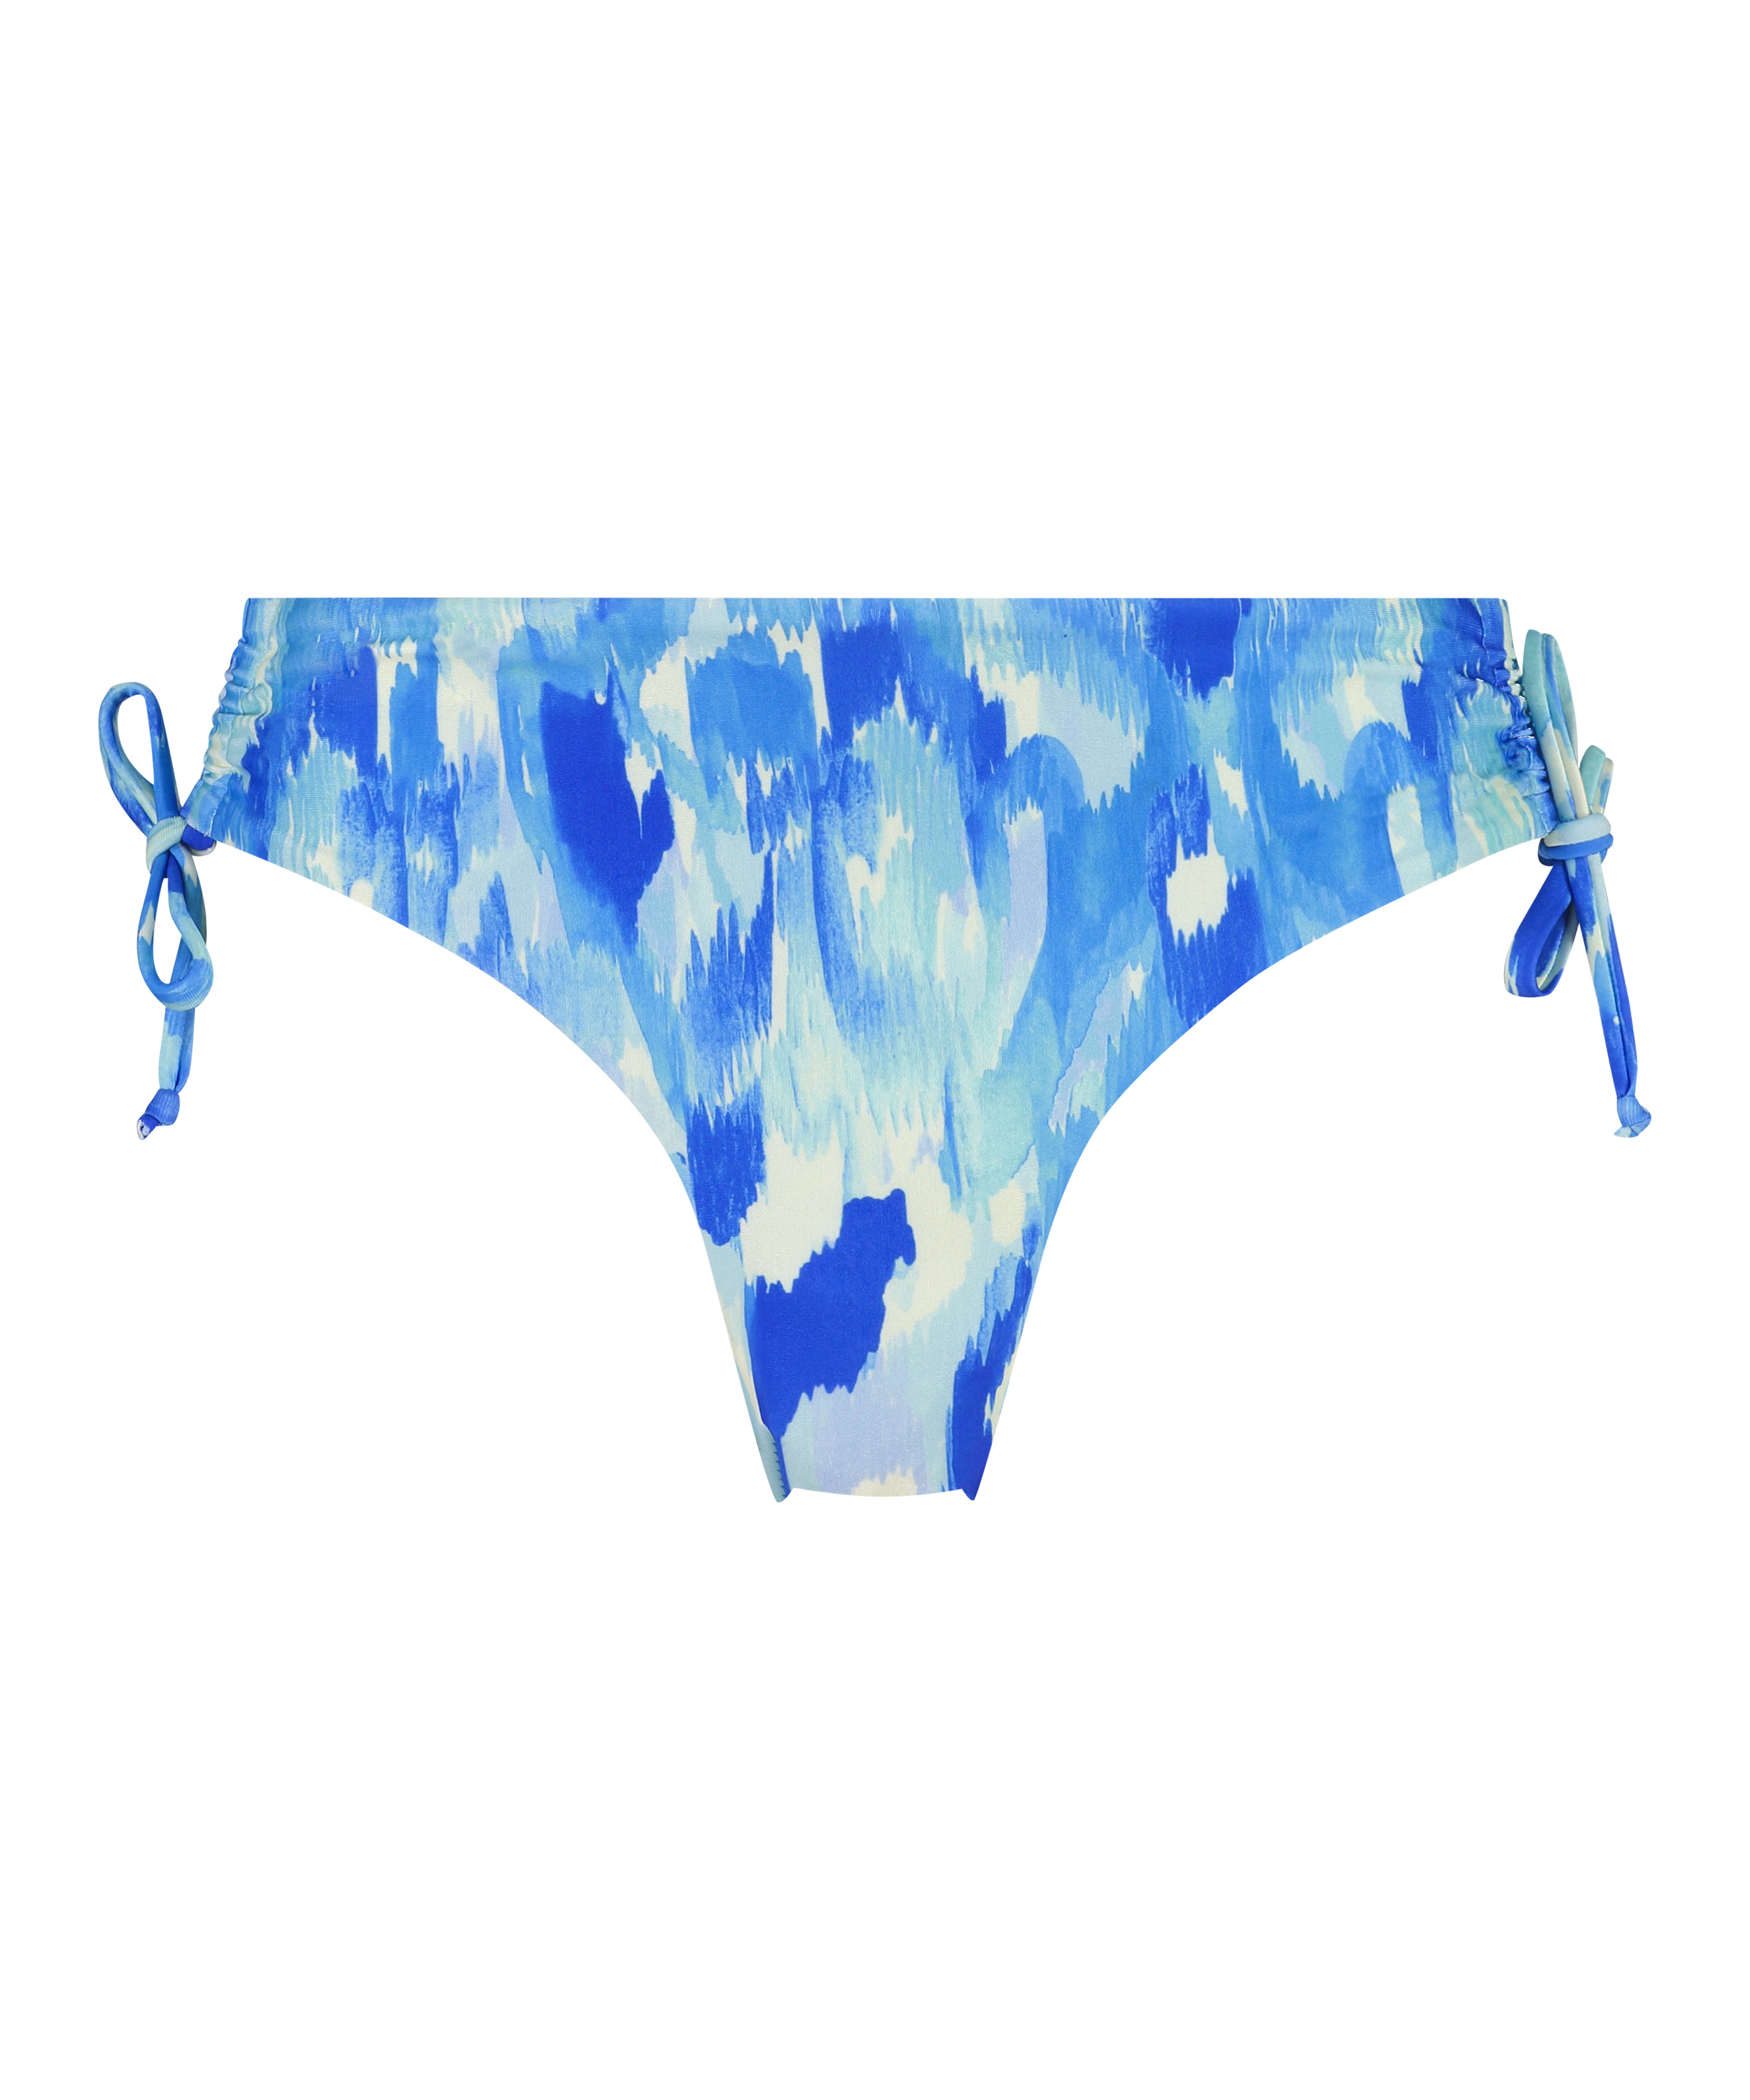 Paraguay Rio Bikini Bottoms, Blue, main